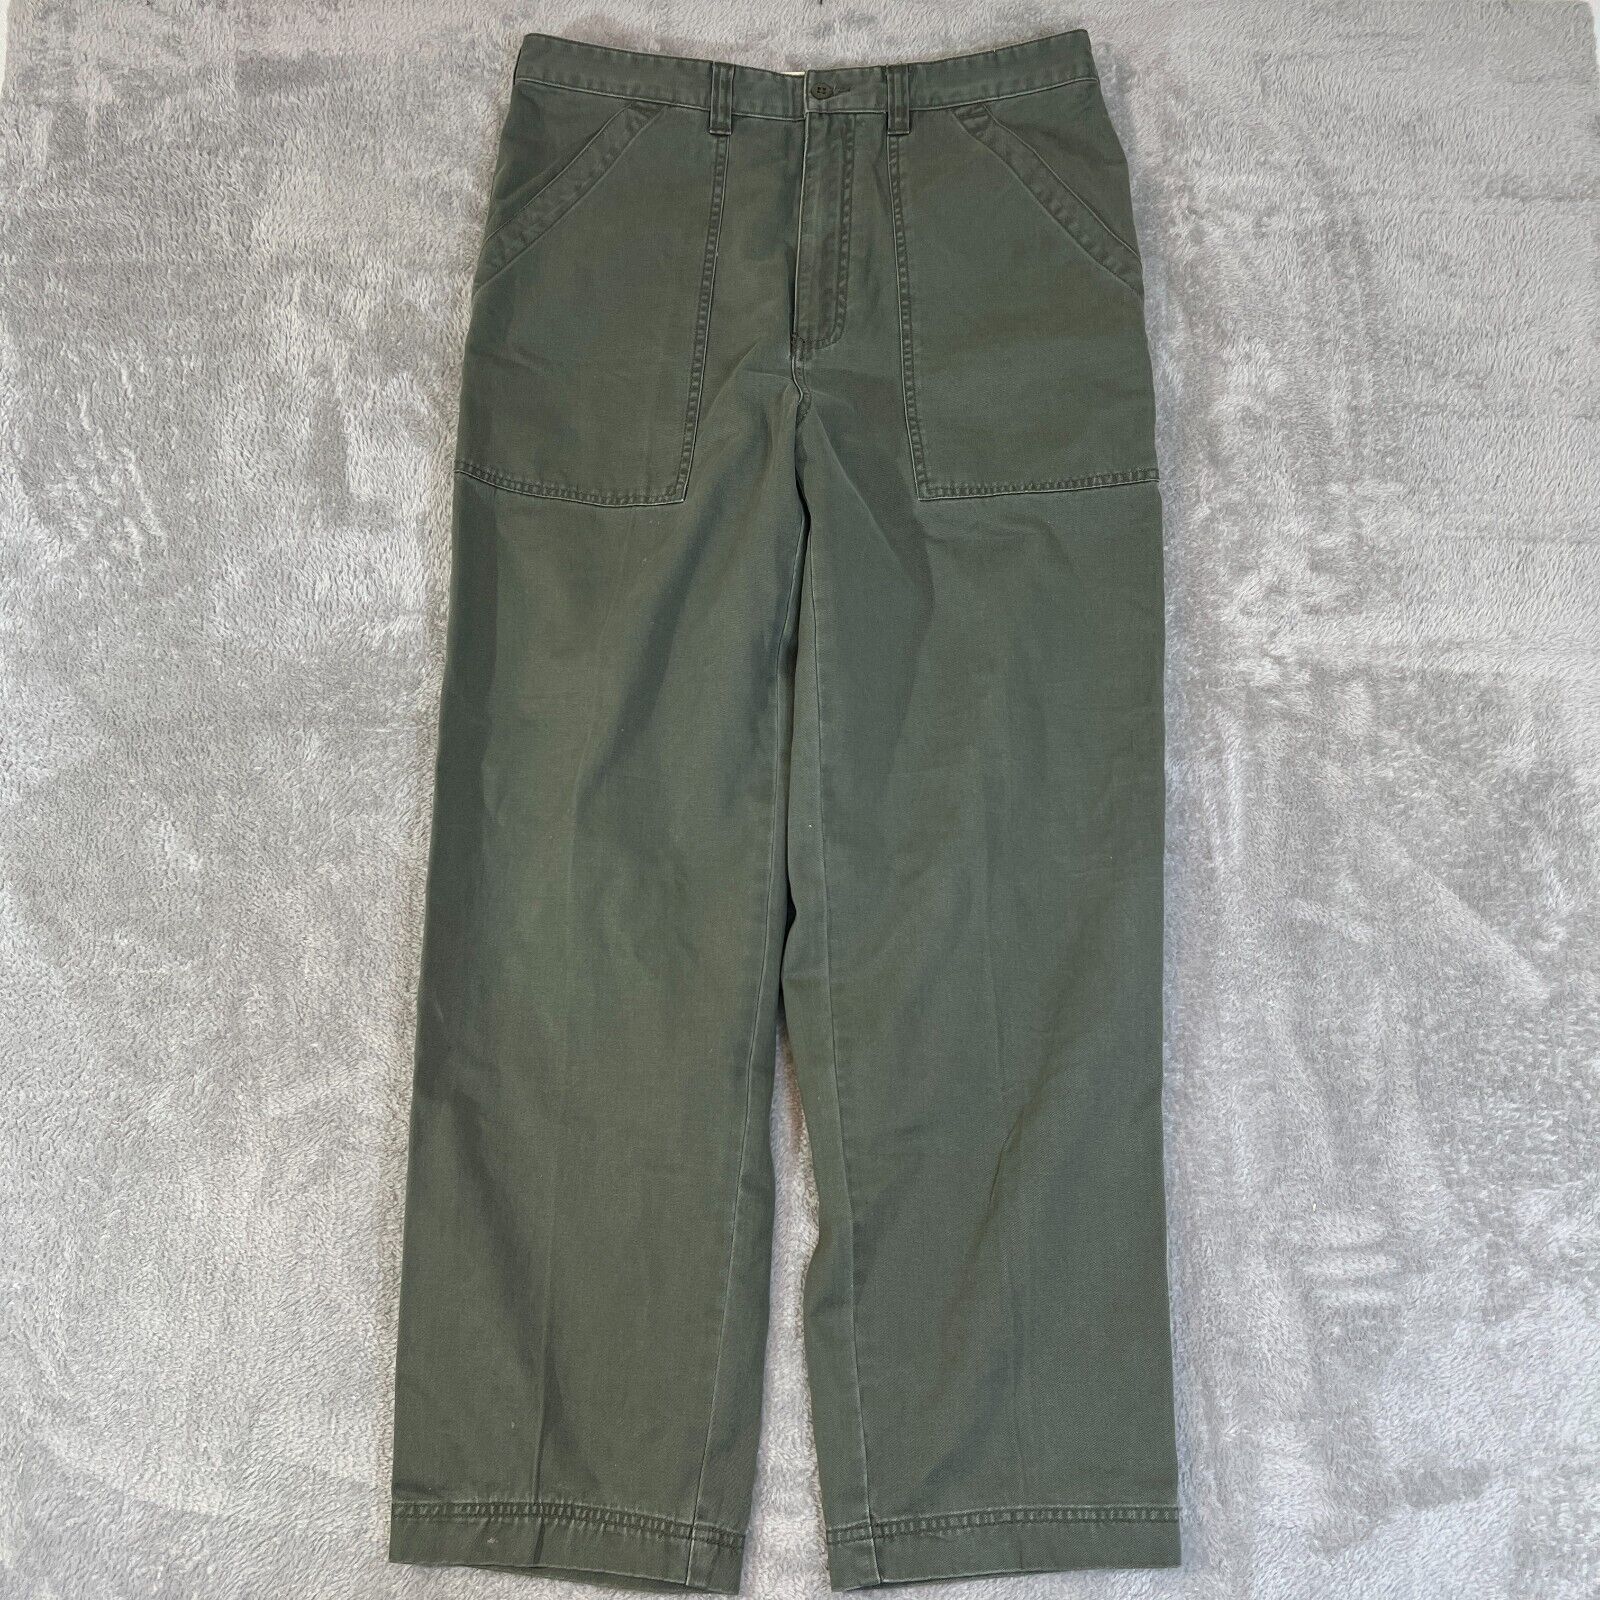 Vintage Tommy Hilfiger Pants Mens 34x30 Green Military Style Skater Y2K Utility